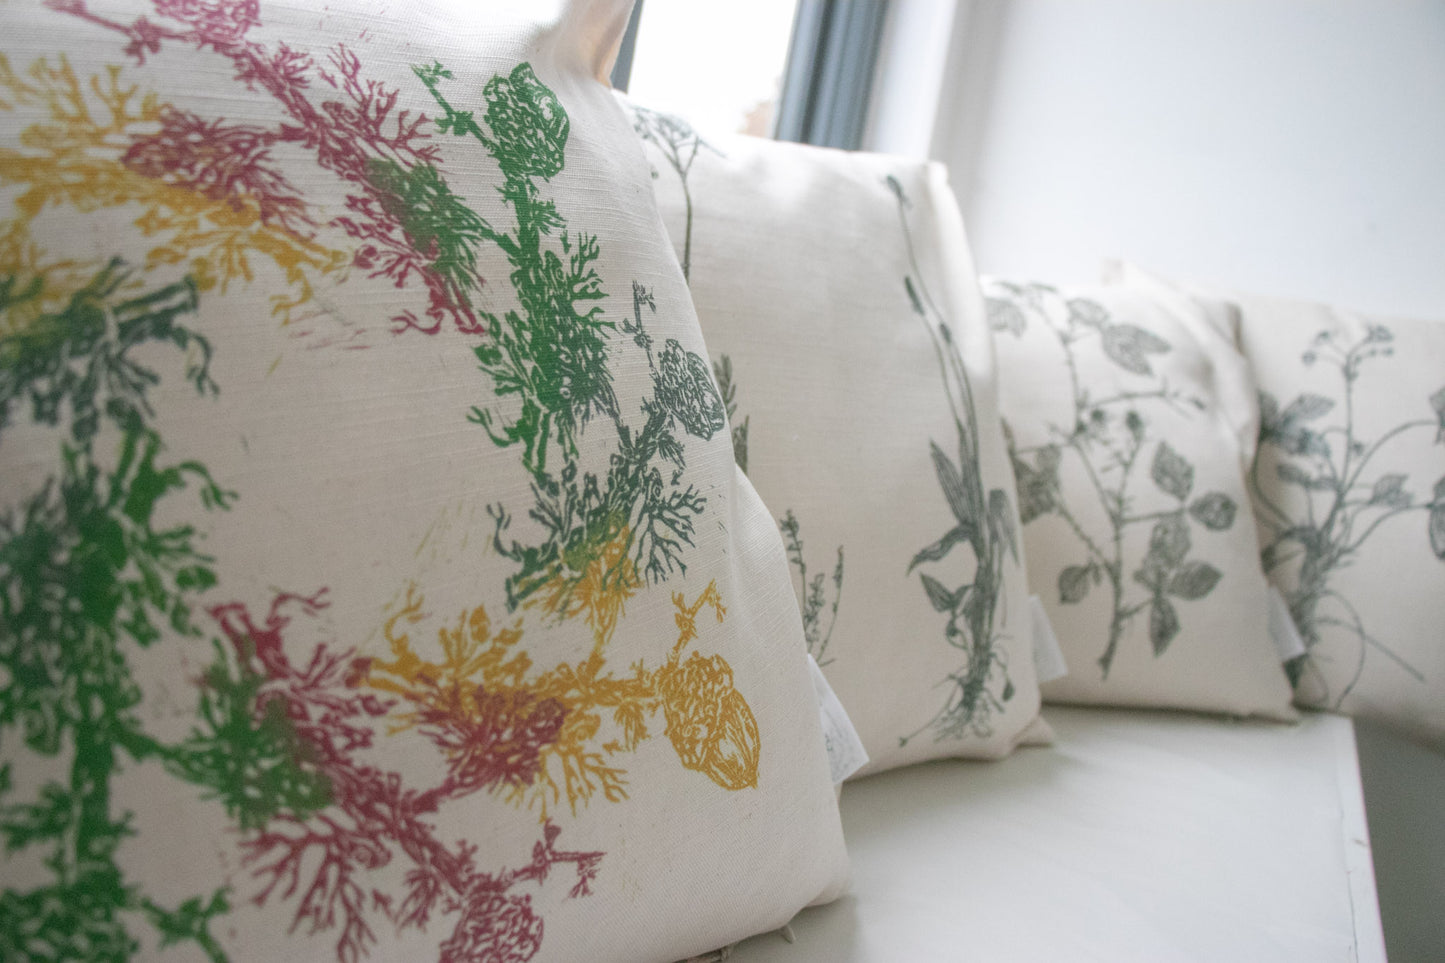 ‘Cuckooflower & Ribwort Plantain’ Linen & Cotton mix Cushion from AMOR Botanical Art, Leitrim